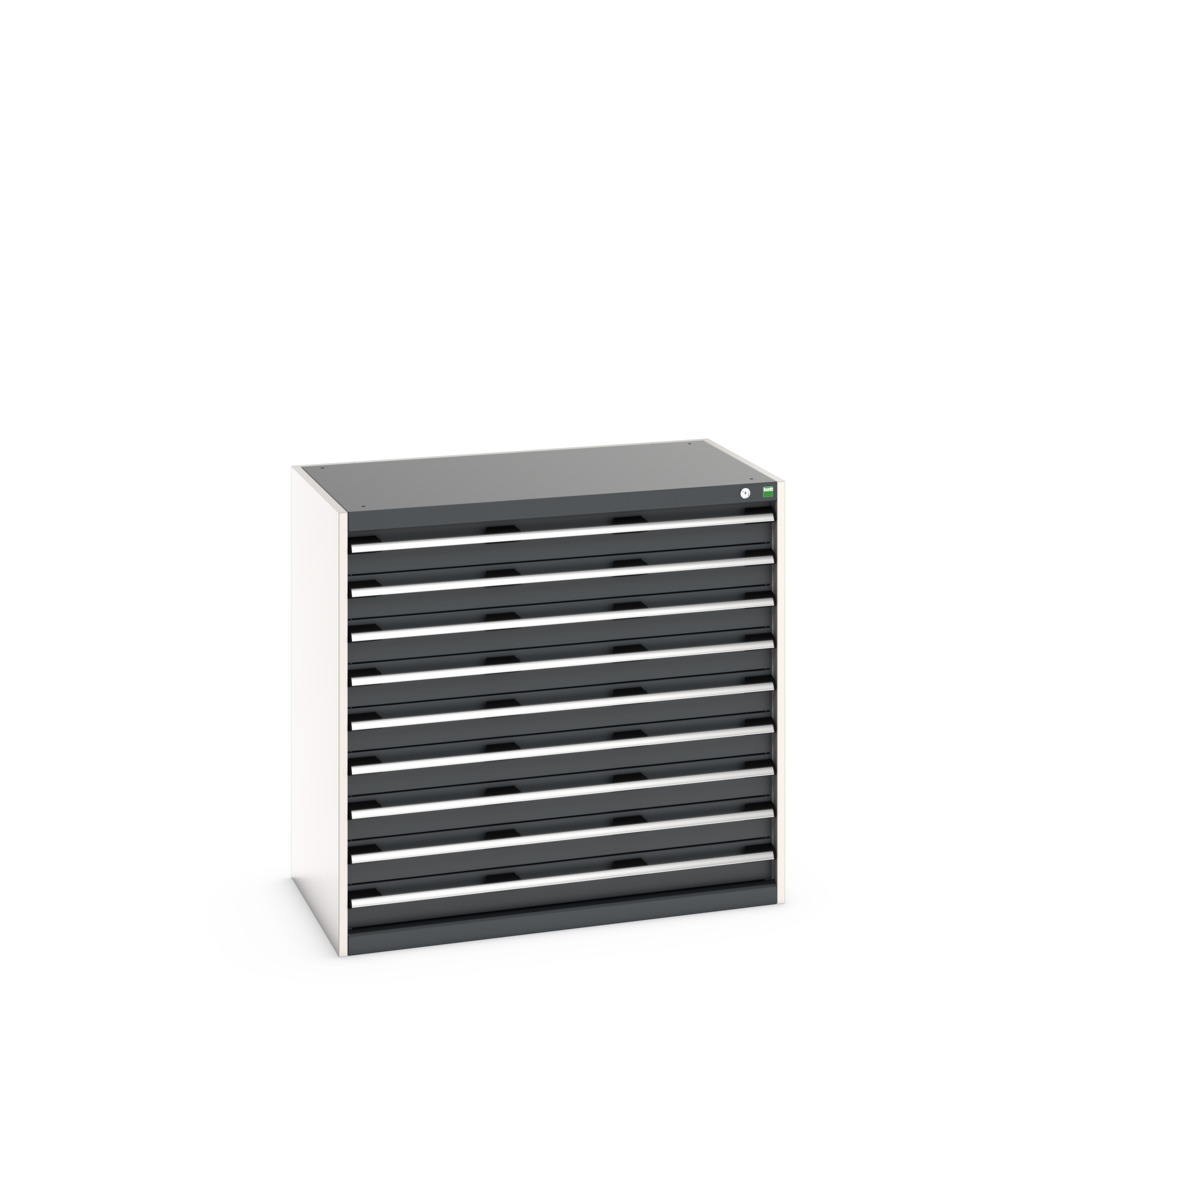 40021035. - cubio drawer cabinet